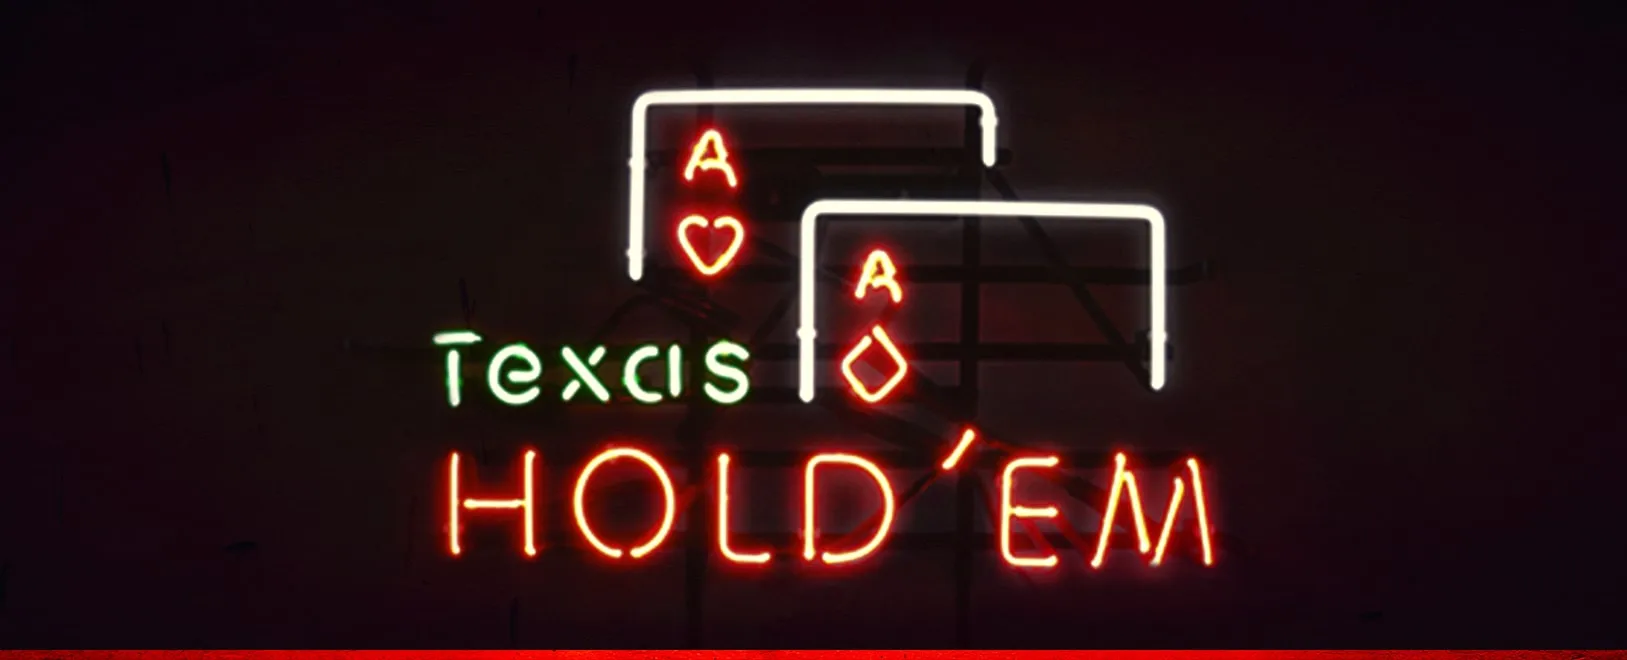 Texas Holdem Win, by slotdrum